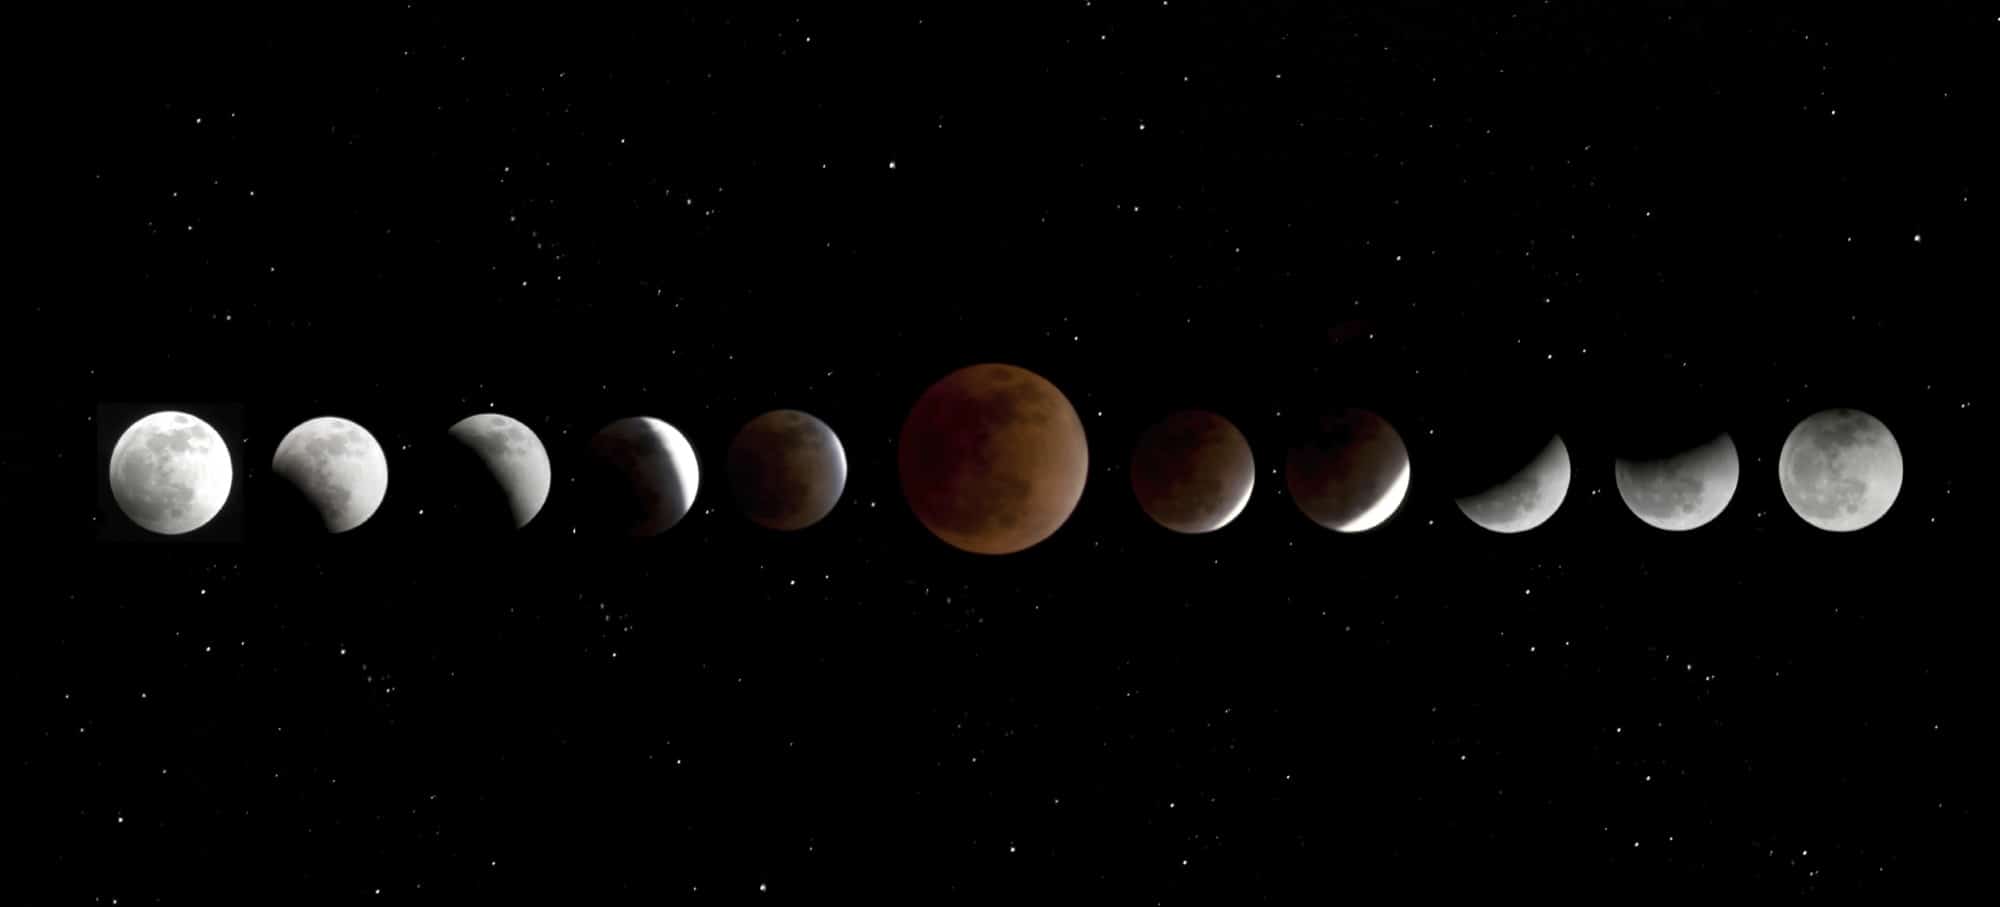 lunar eclipse 2019 vedic astrology